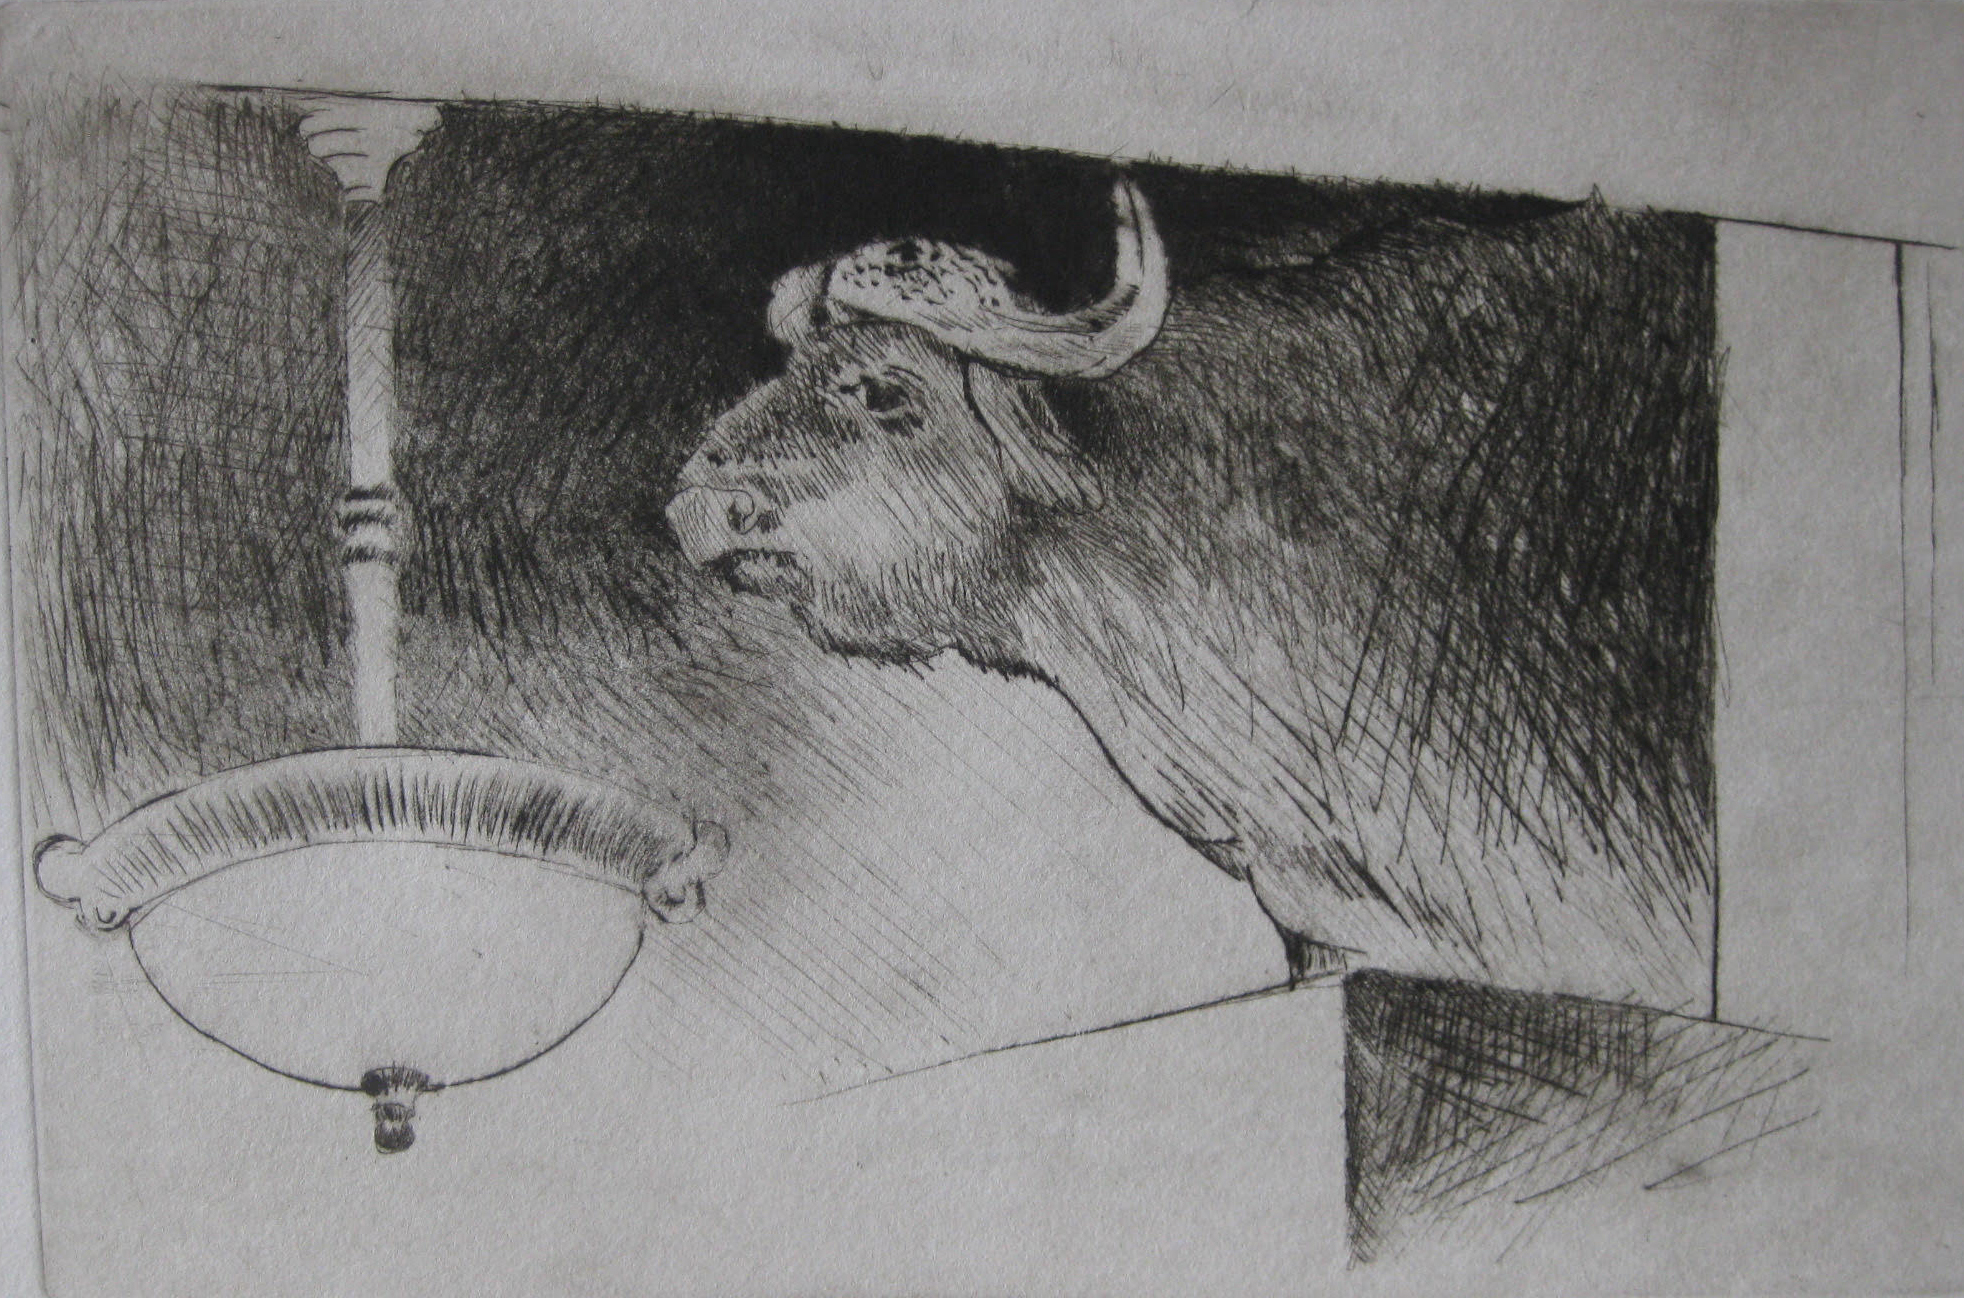 Print of an ox looking over a light fixture